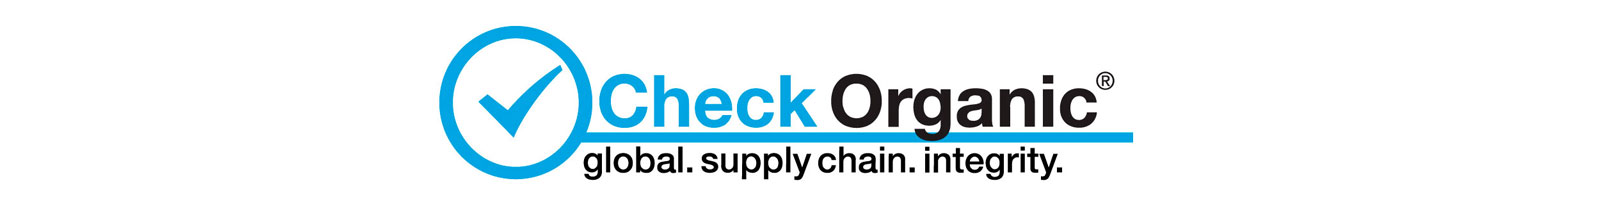 Check Organic - Global Supply Chain Integrity